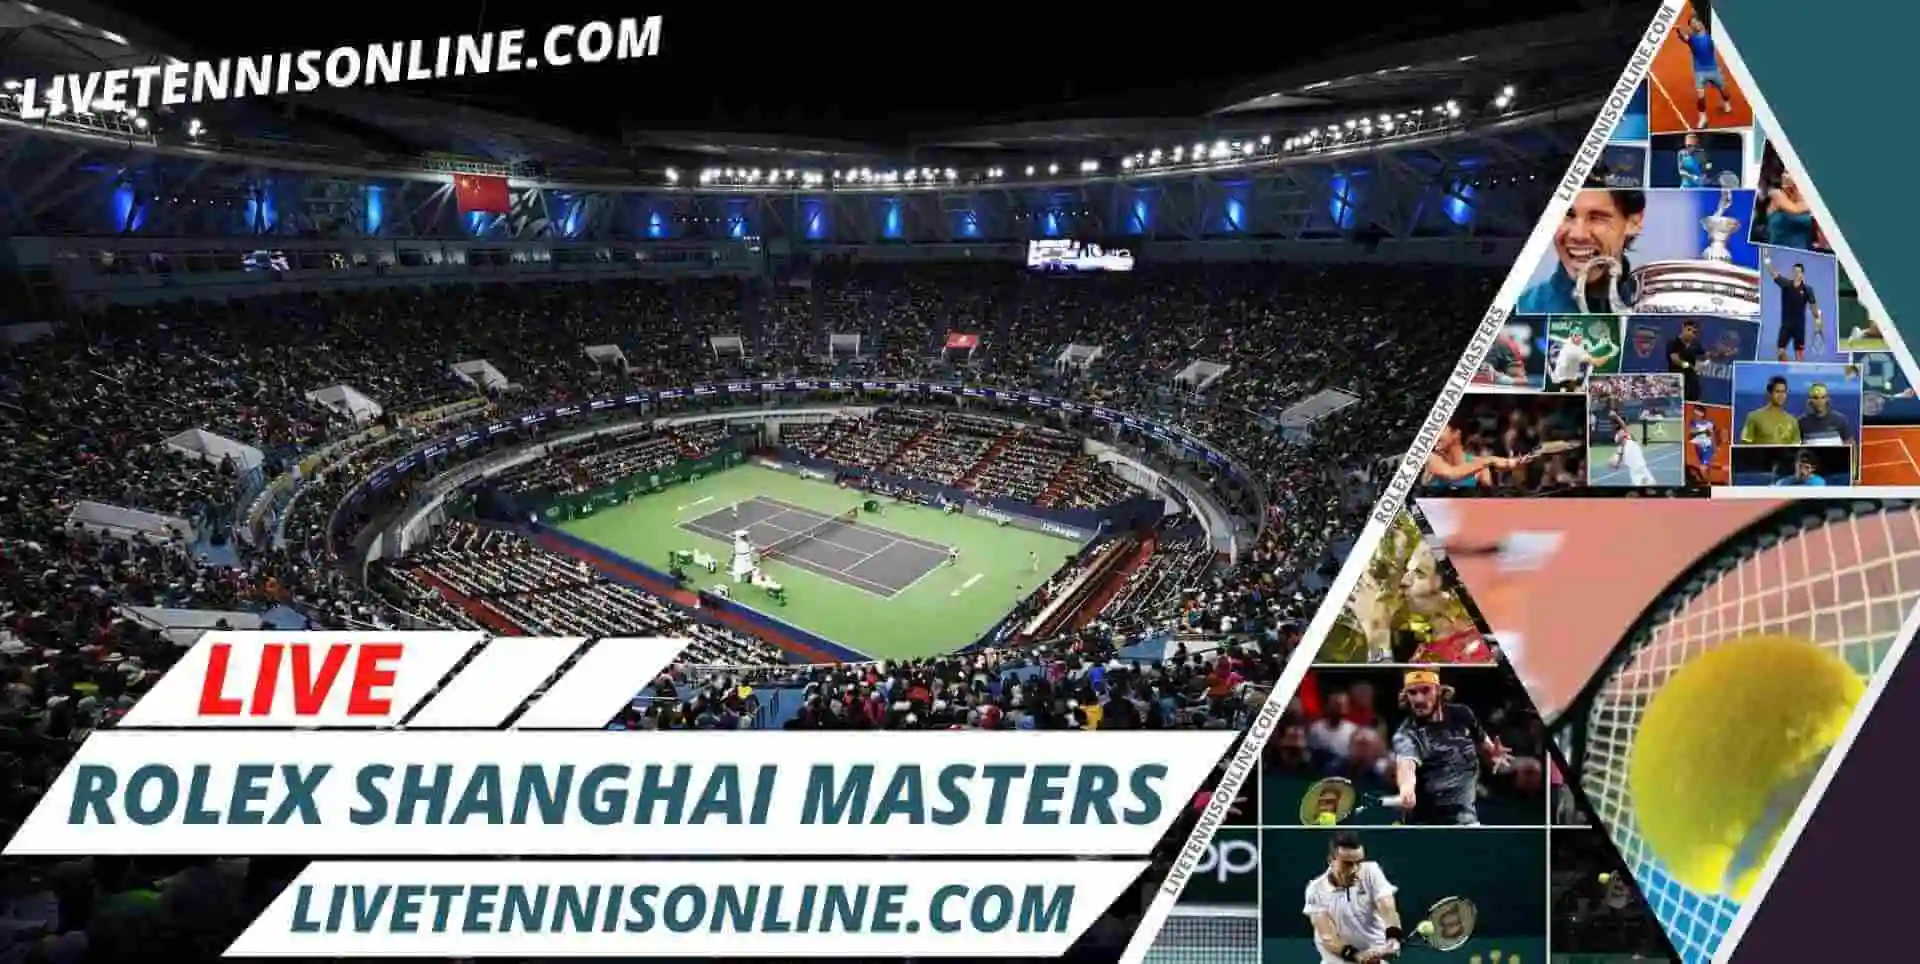 Shanghai Rolex Masters 2018 Live Stream